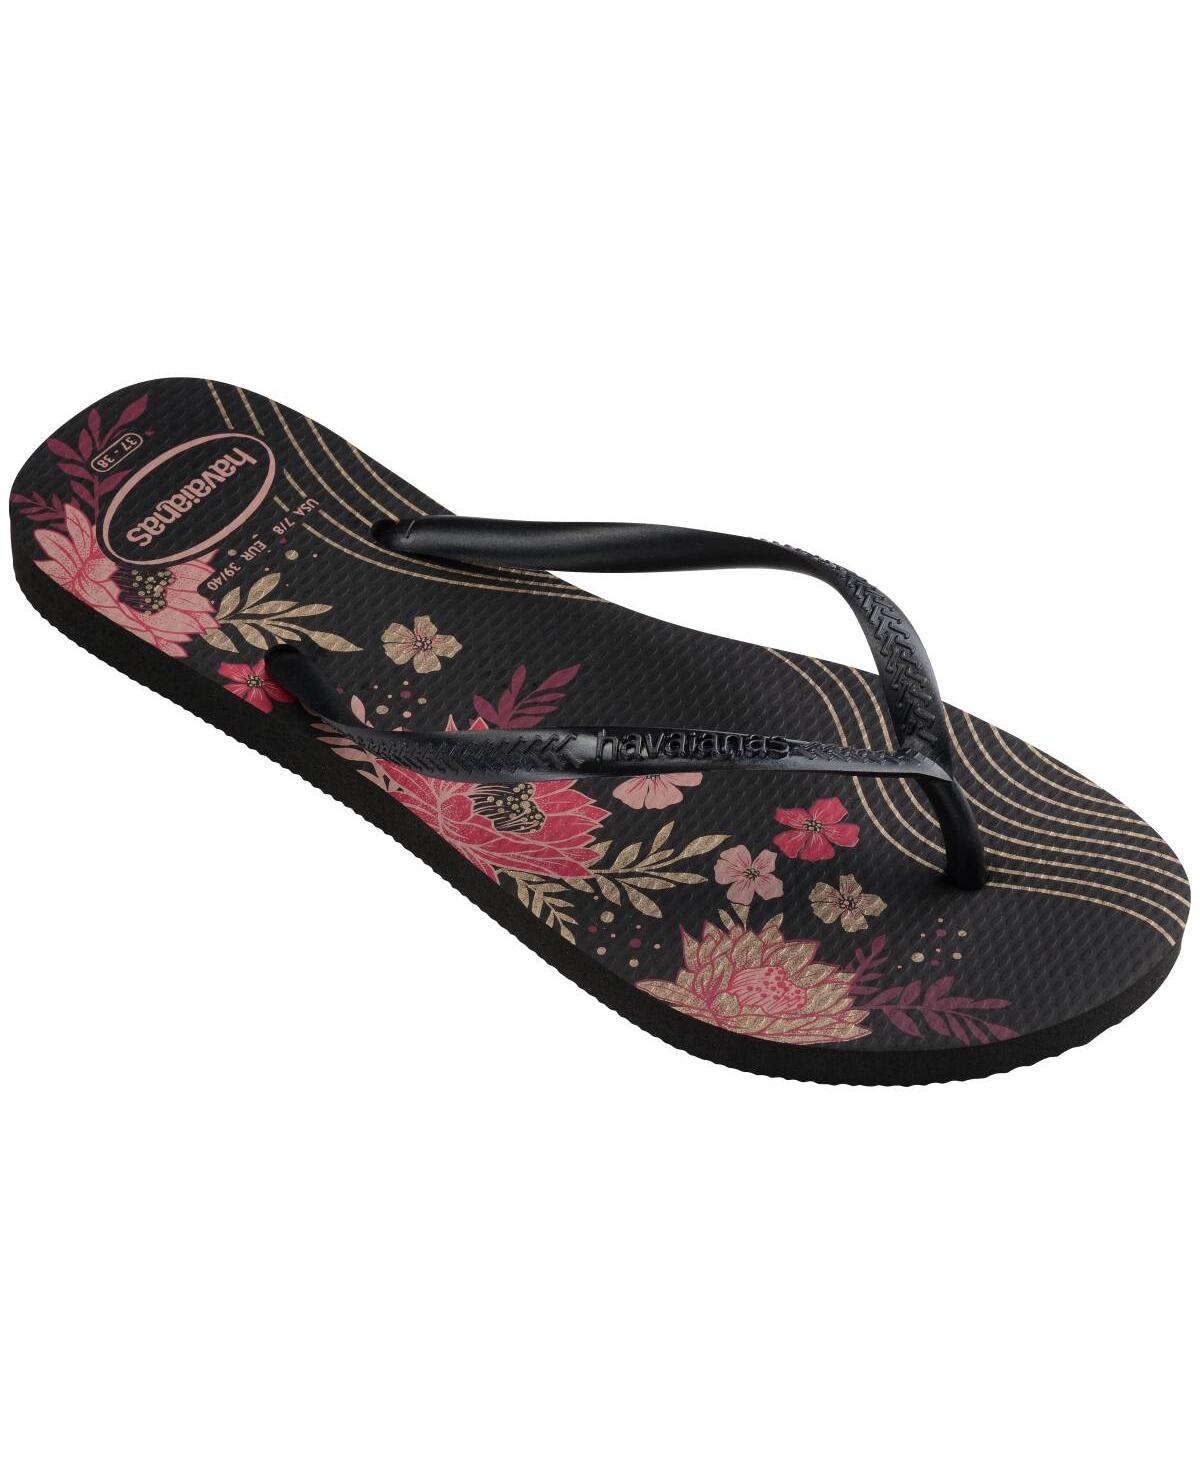 Shop Havaianas Women's Slim Sandal Black